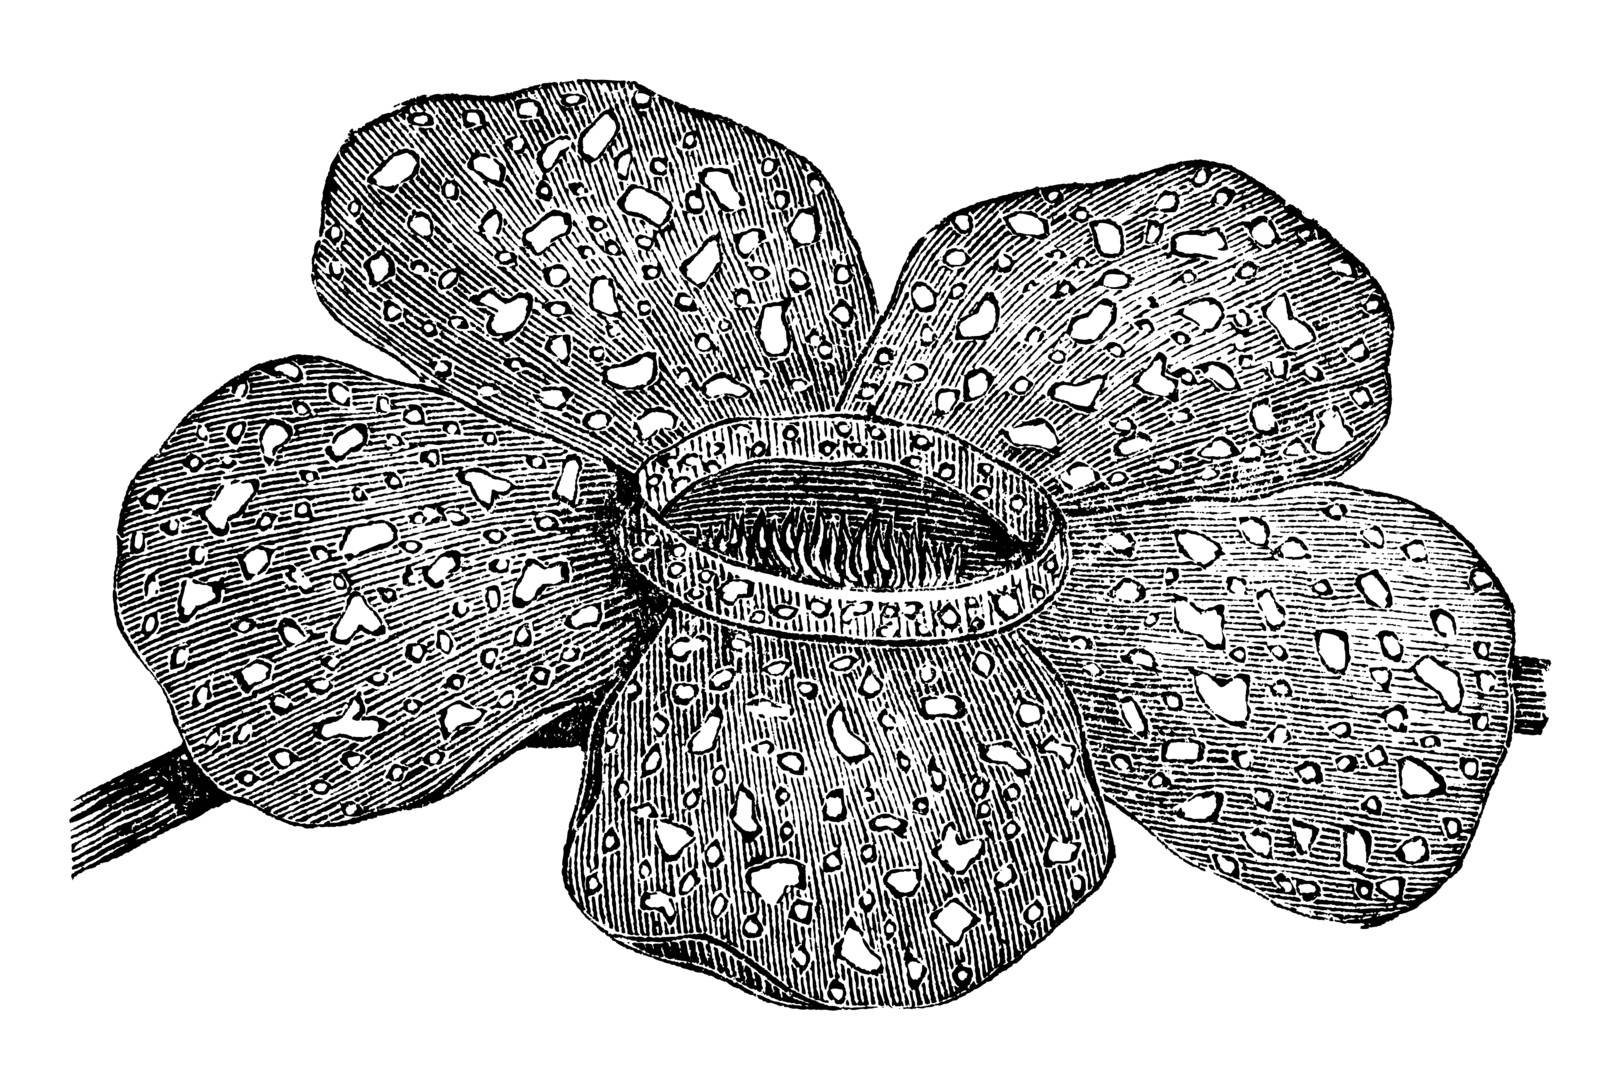 Rafflesia arnoldii or Rafflesia titan vintage engraving by Morphart